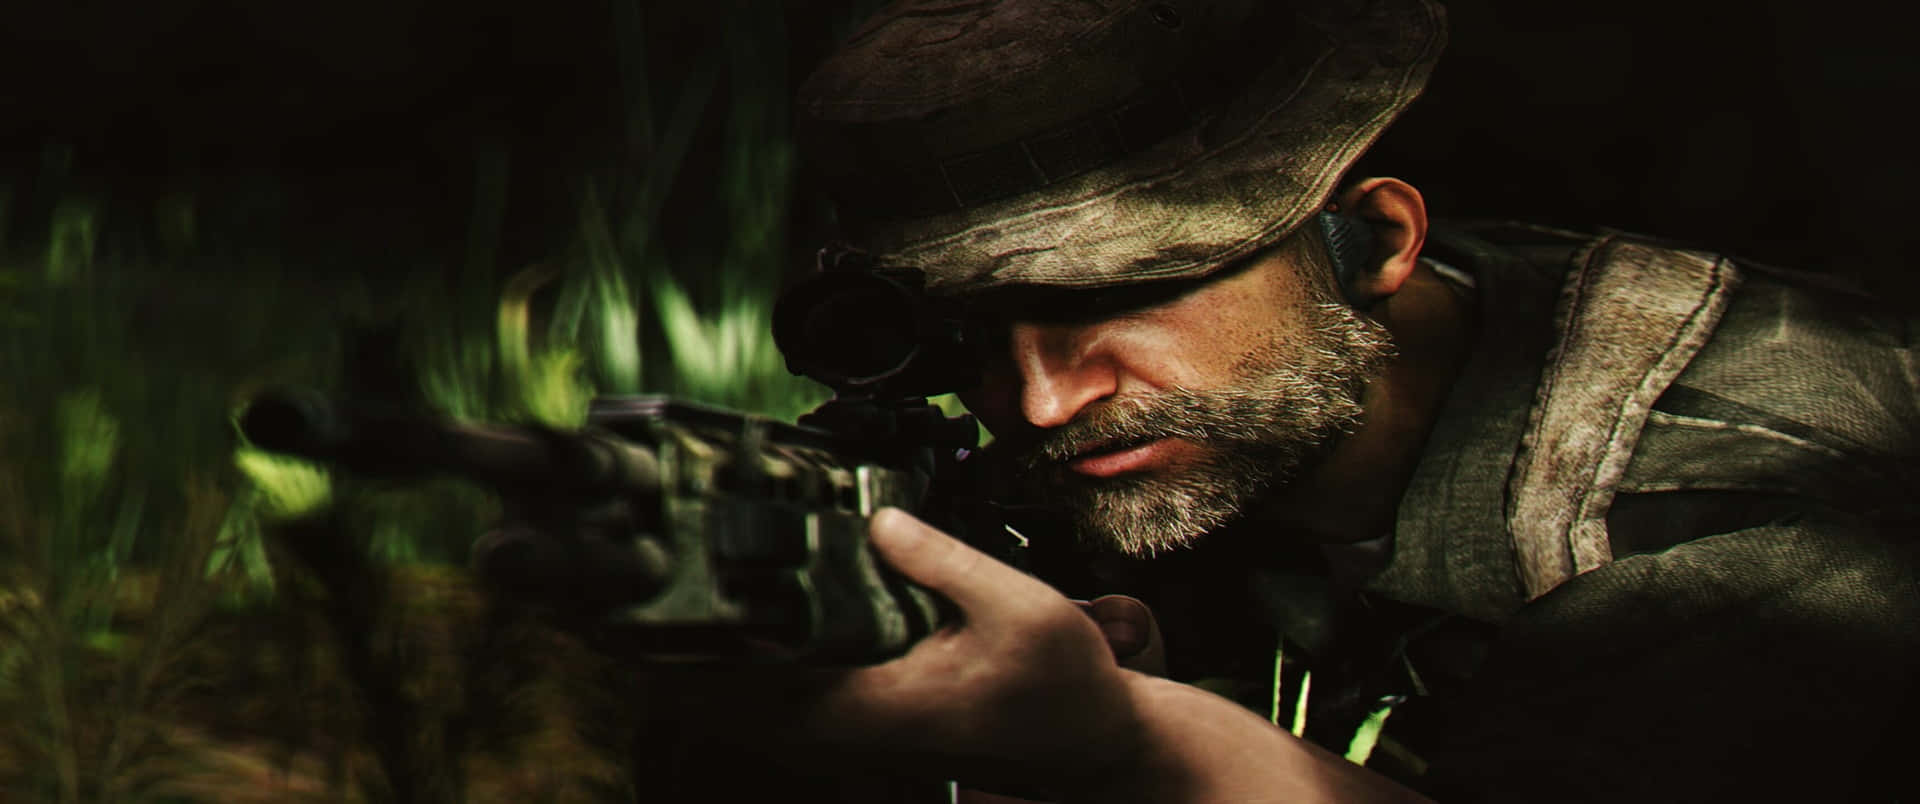 Fondode Pantalla De Sniper Close Up 3440x1440p Call Of Duty Modern Warfare.